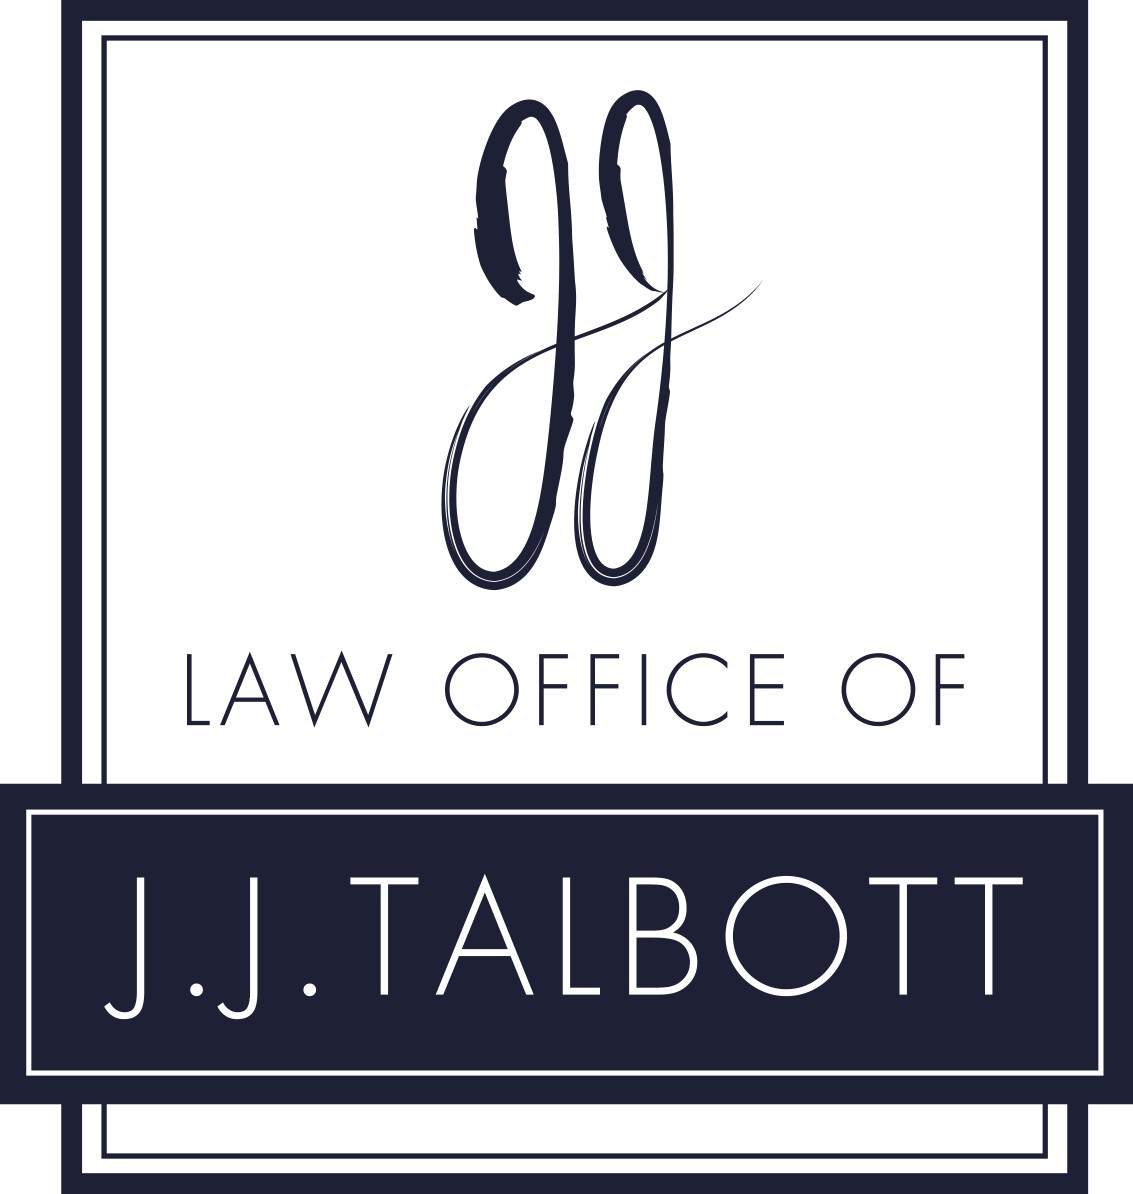 Law Office of J.J. Talbott